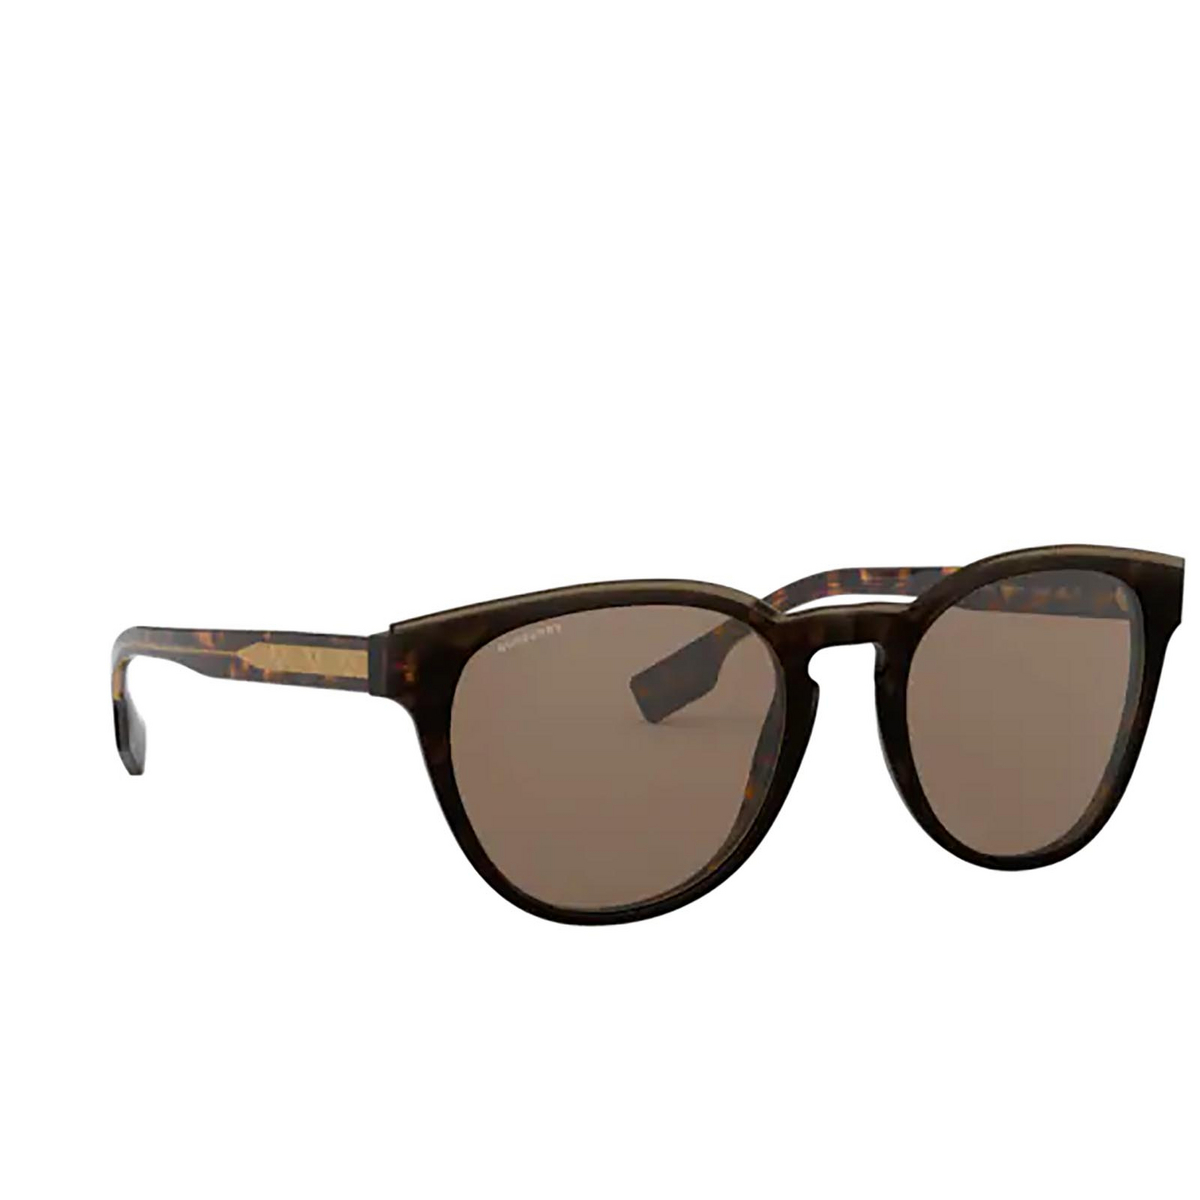 Burberry BARTLETT Sunglasses 385173 Transparent Grey on Havana - three-quarters view